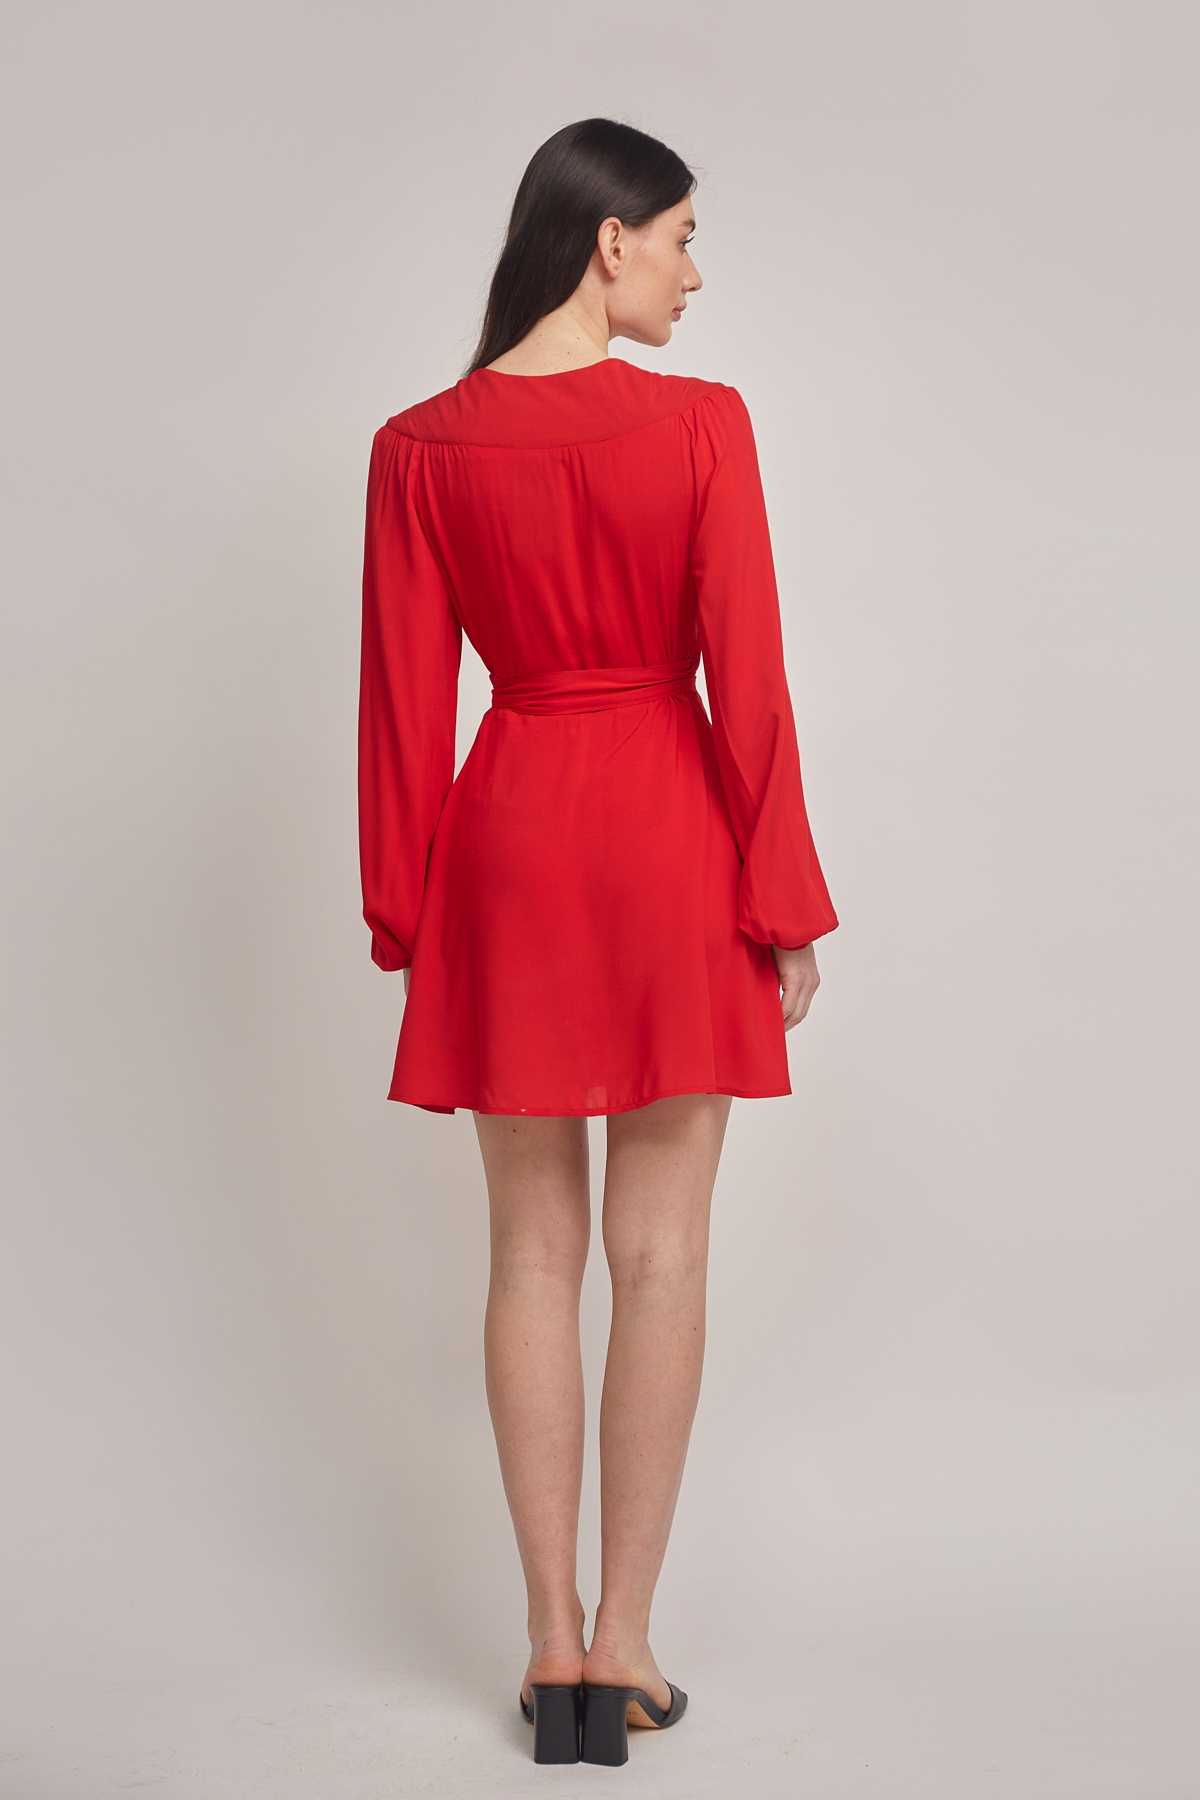 Red short dress, photo 5